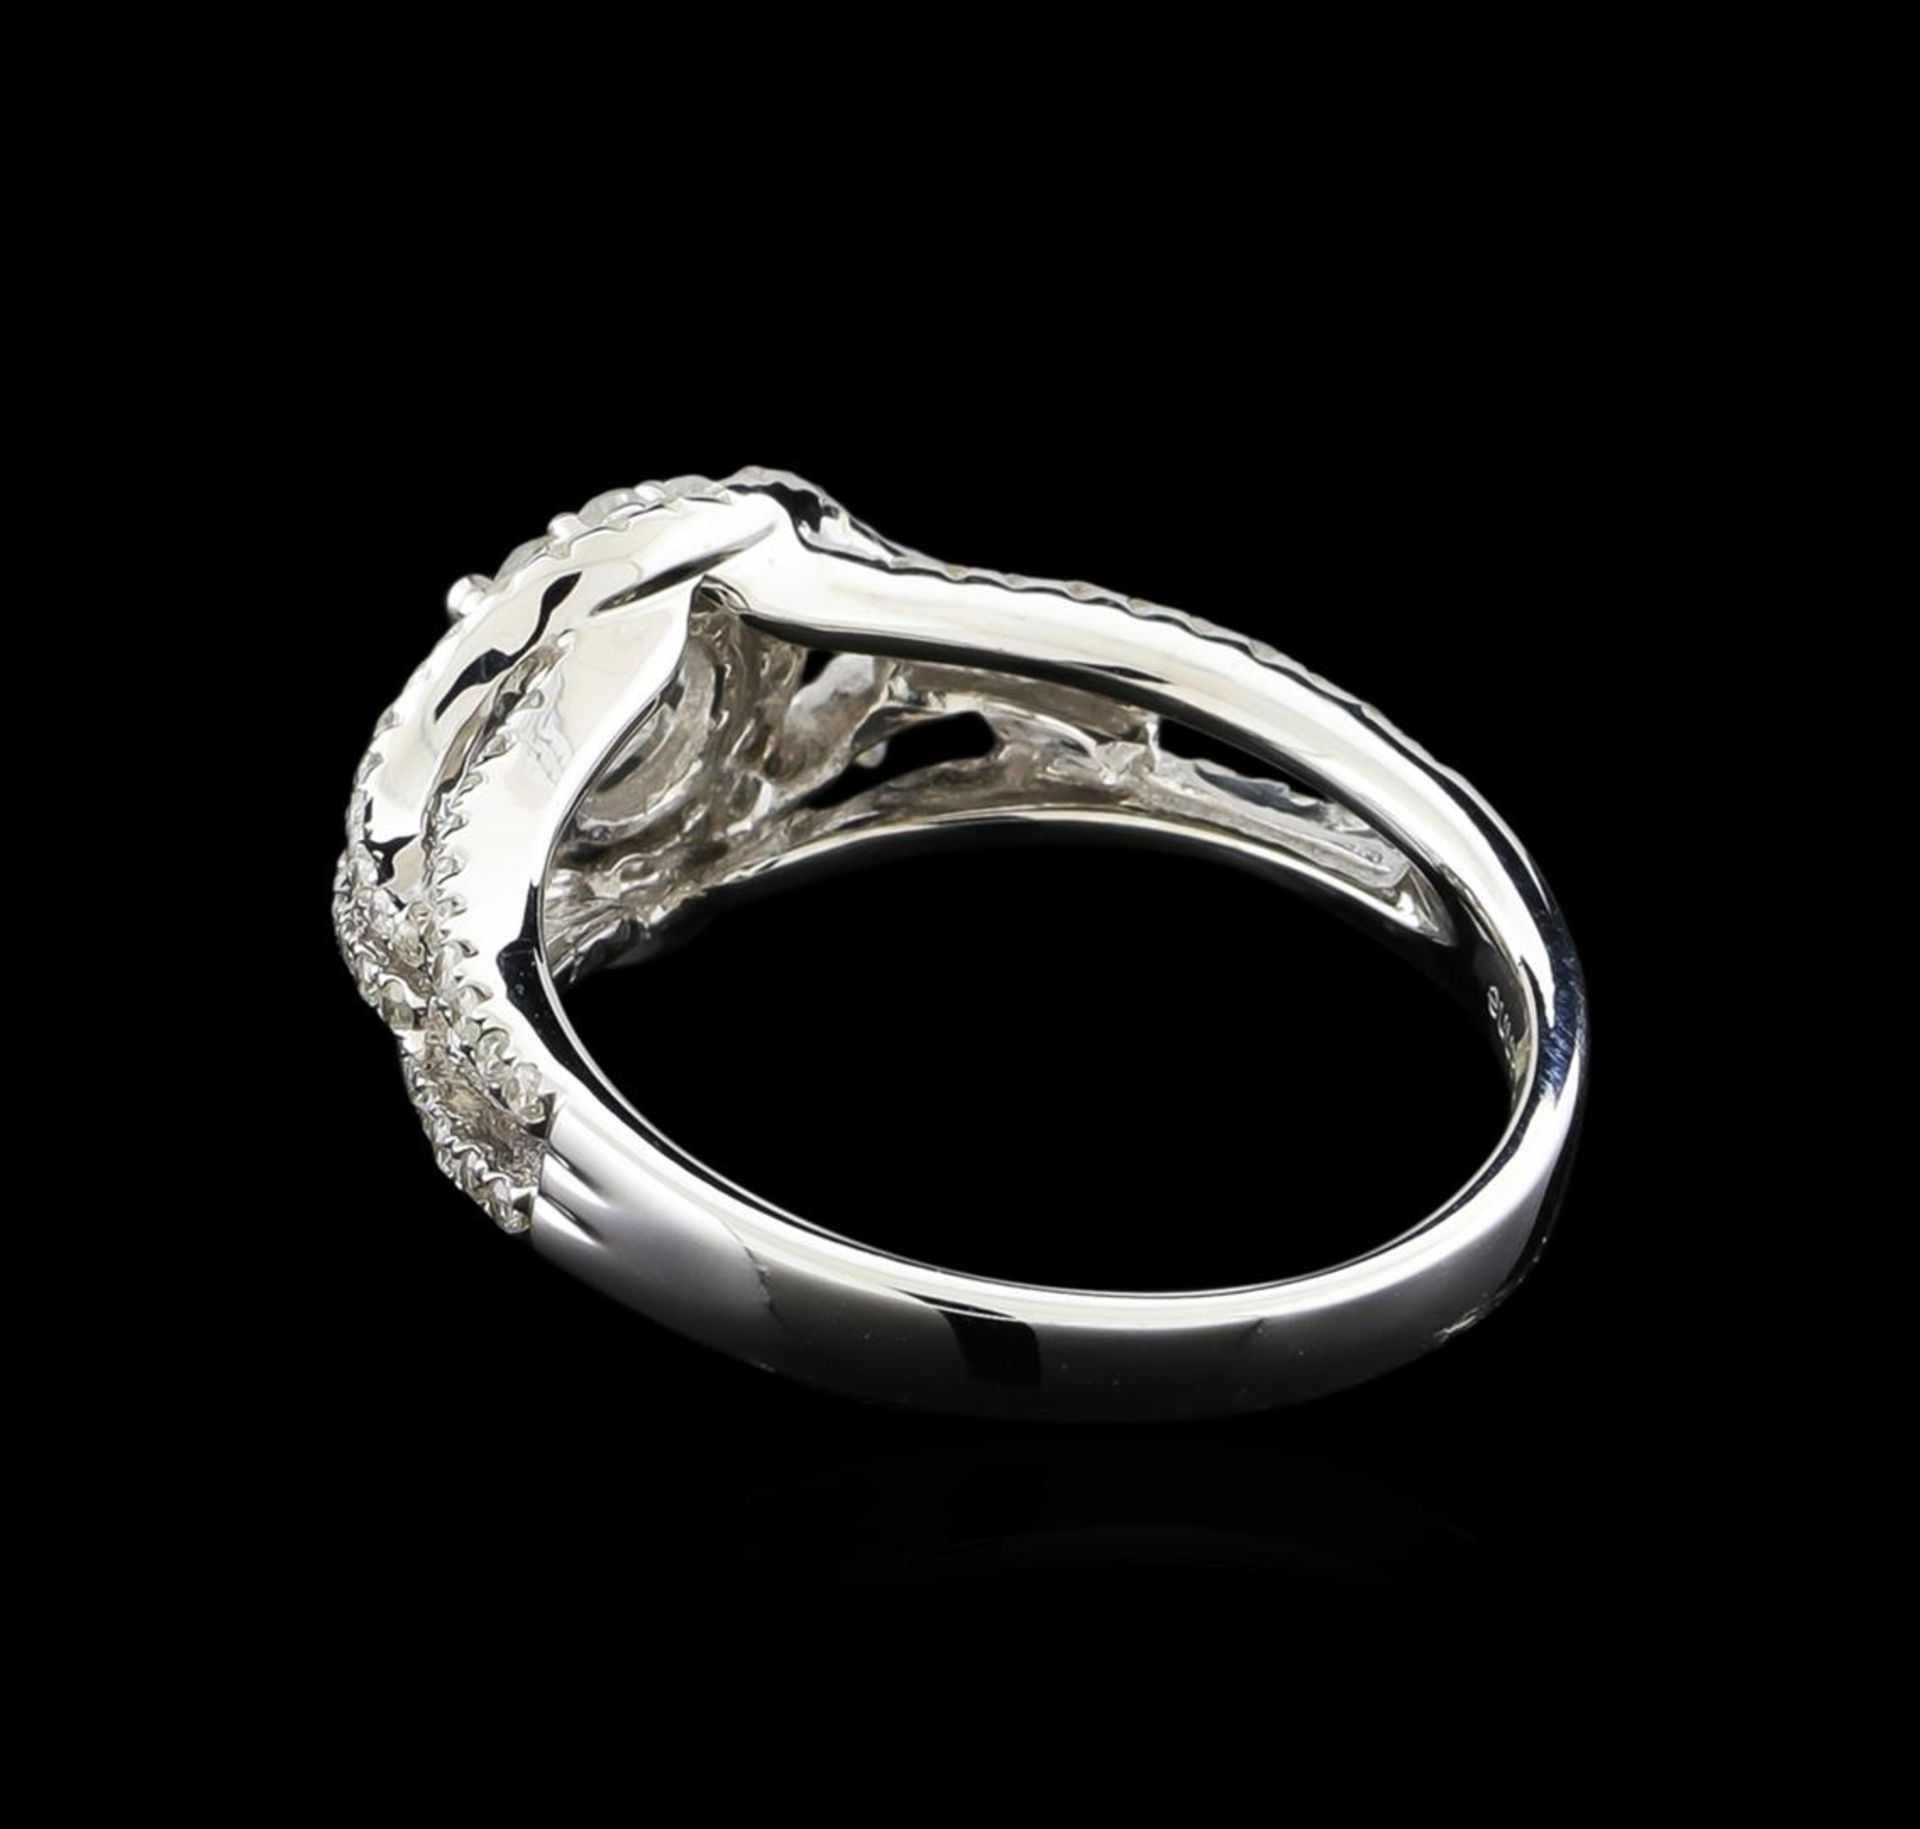 14KT White Gold 1.17 ctw Diamond Ring - Image 3 of 5